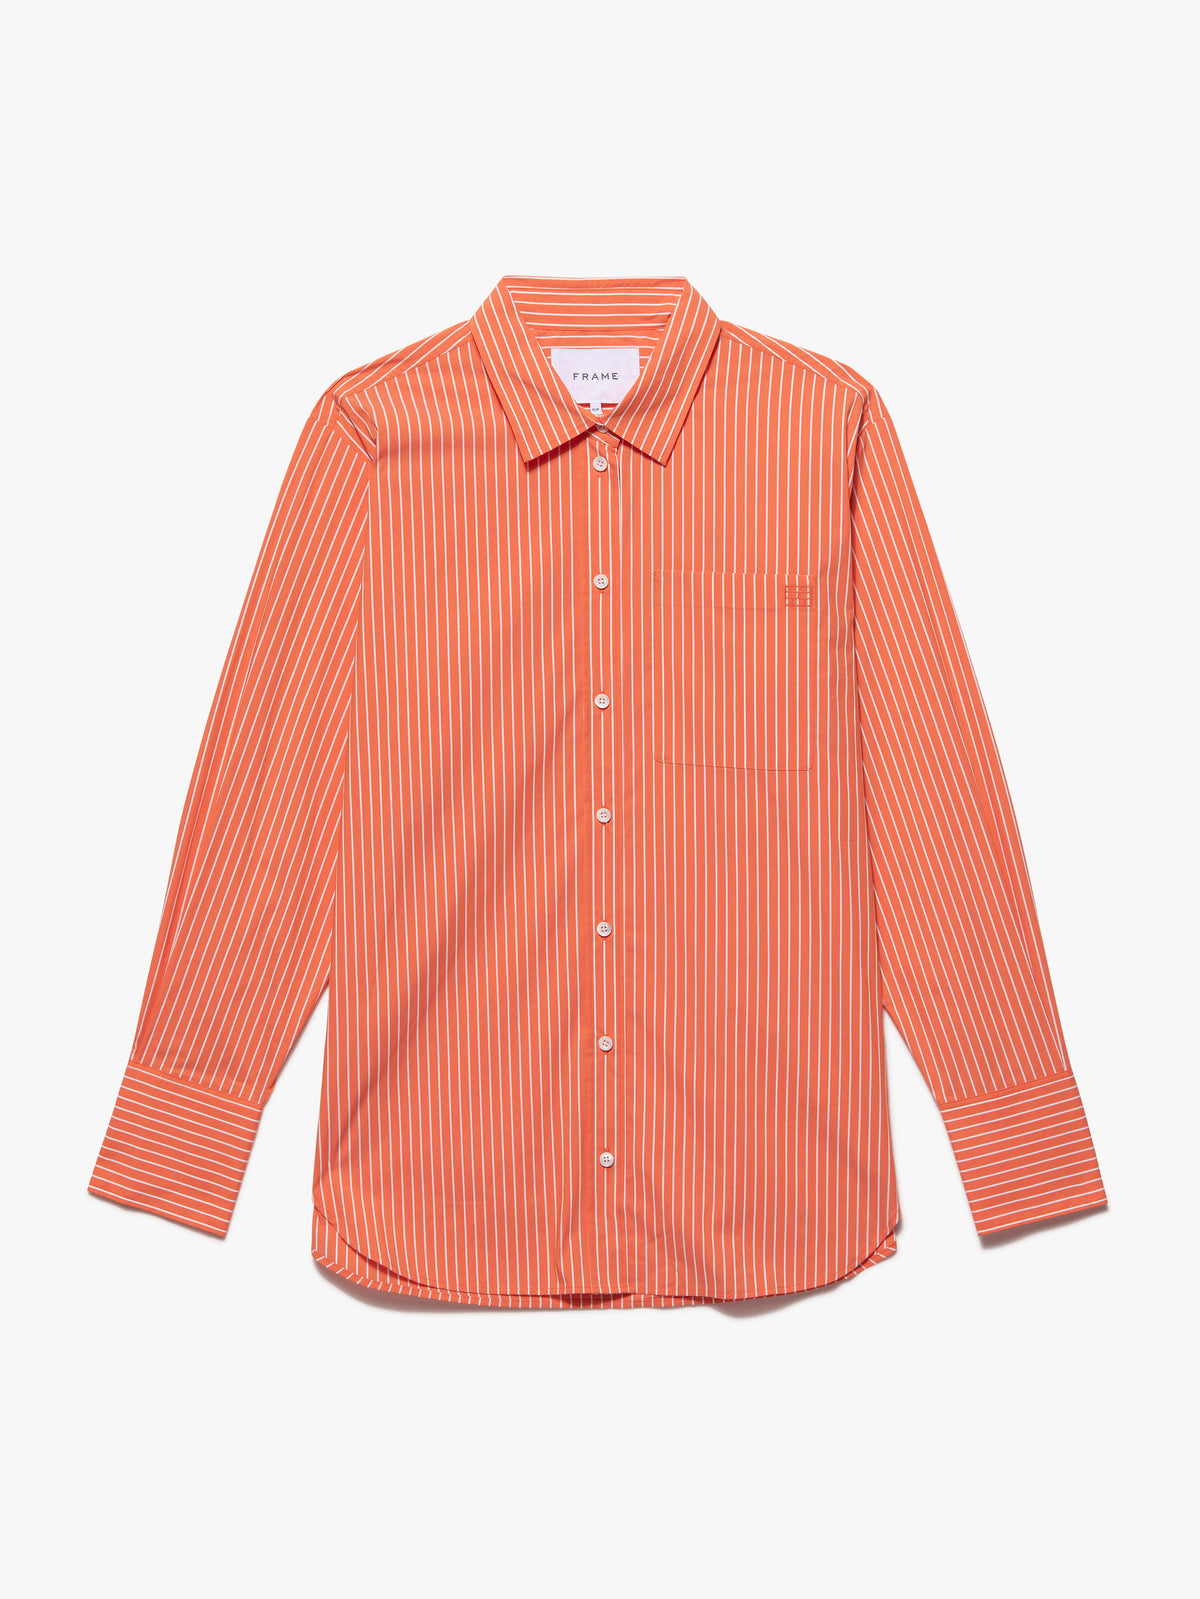 FRAME - The Oversized Shirt - Tangerine Multi - Council Studio